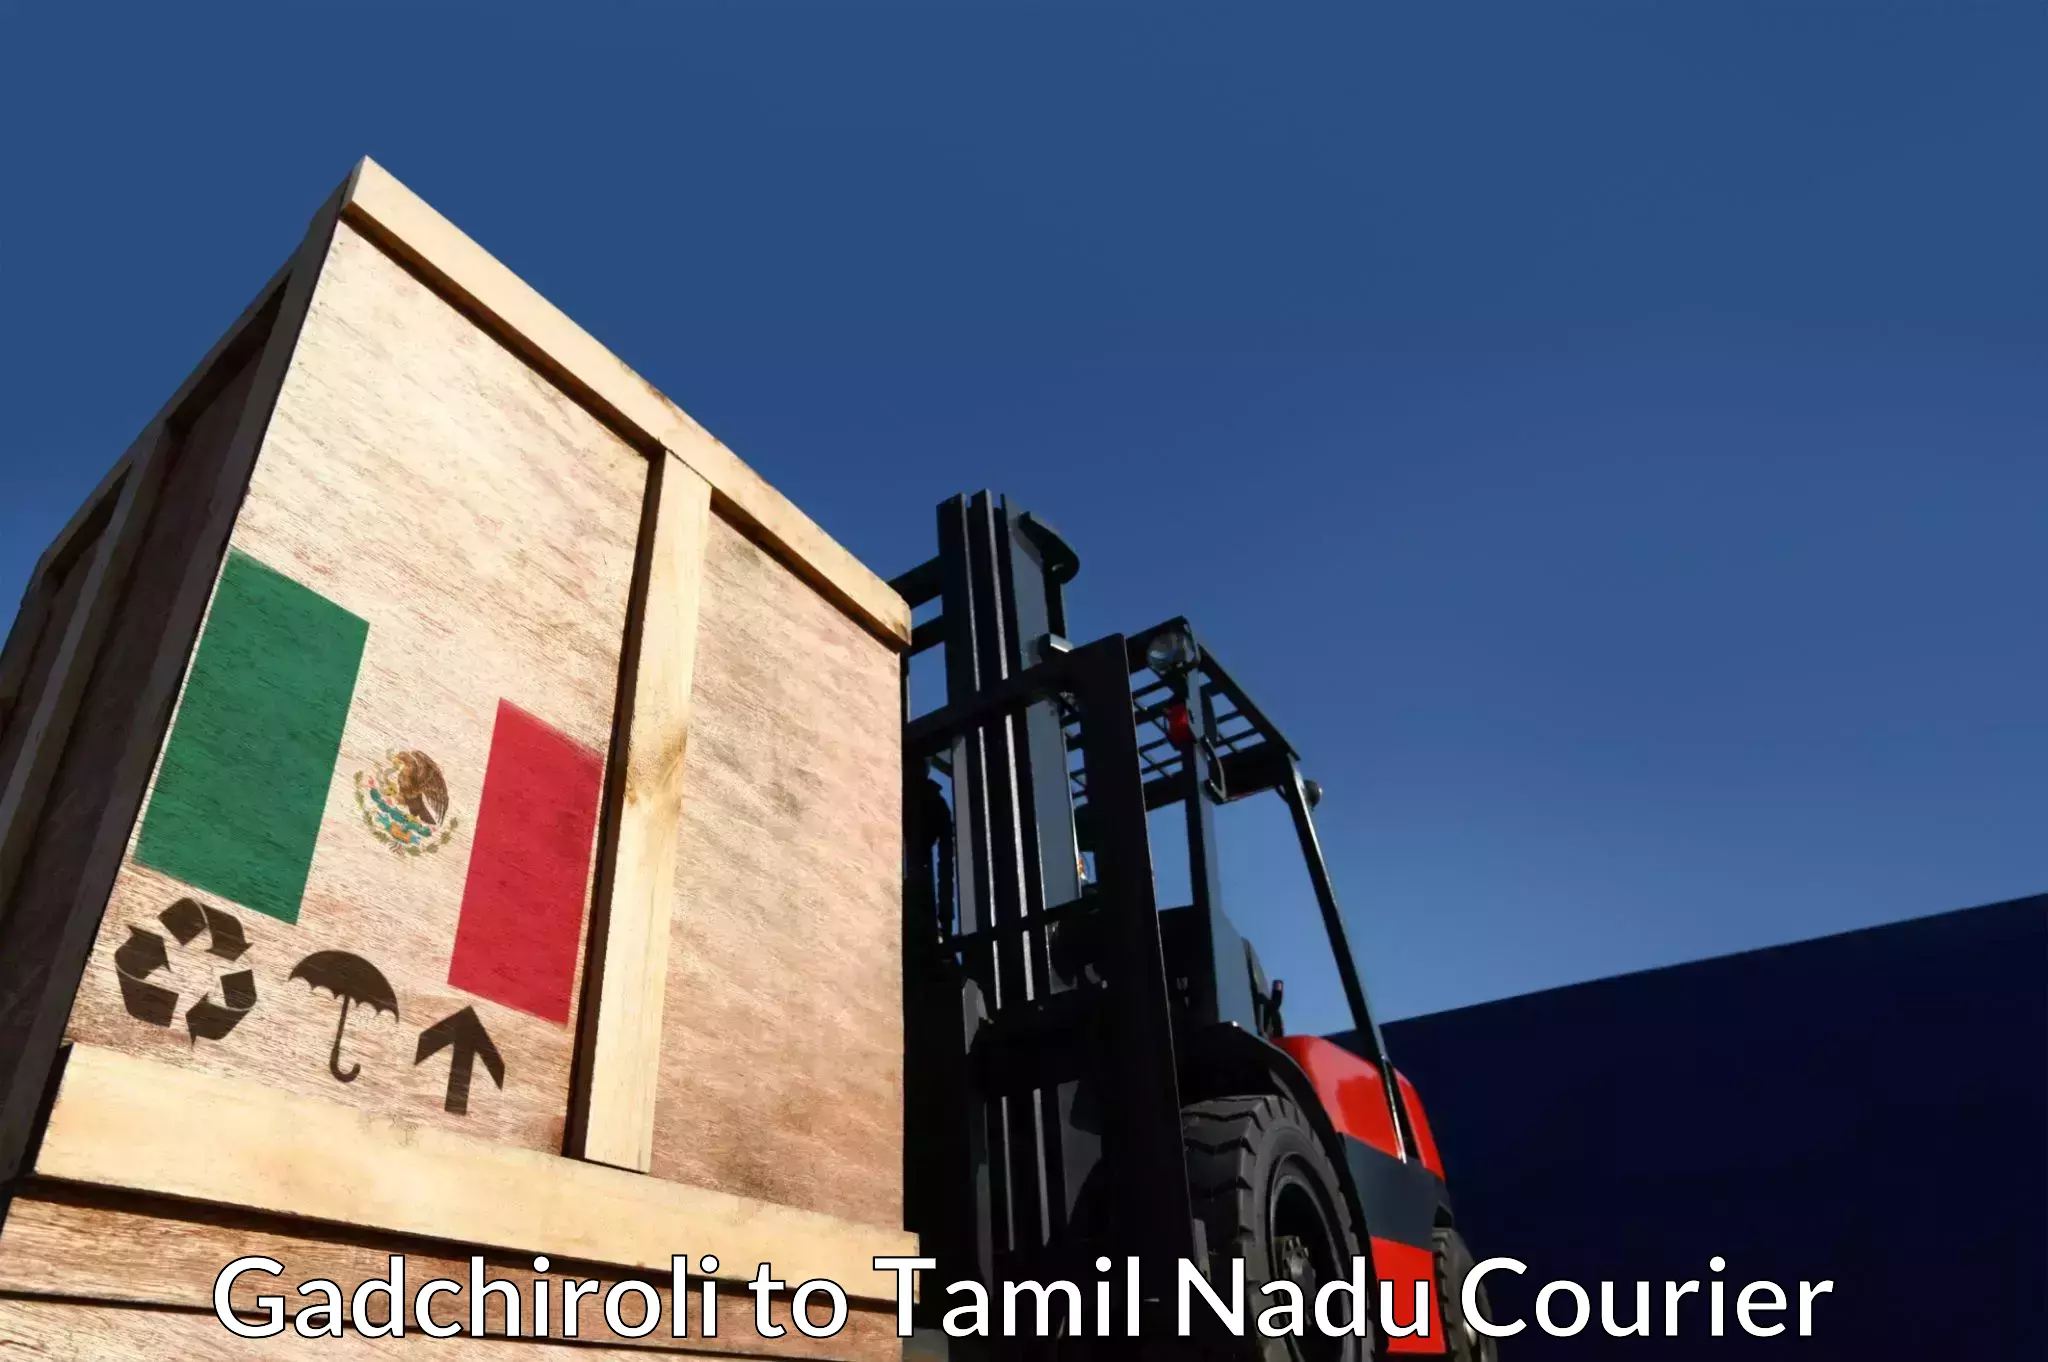 Efficient shipping operations Gadchiroli to Tamil Nadu